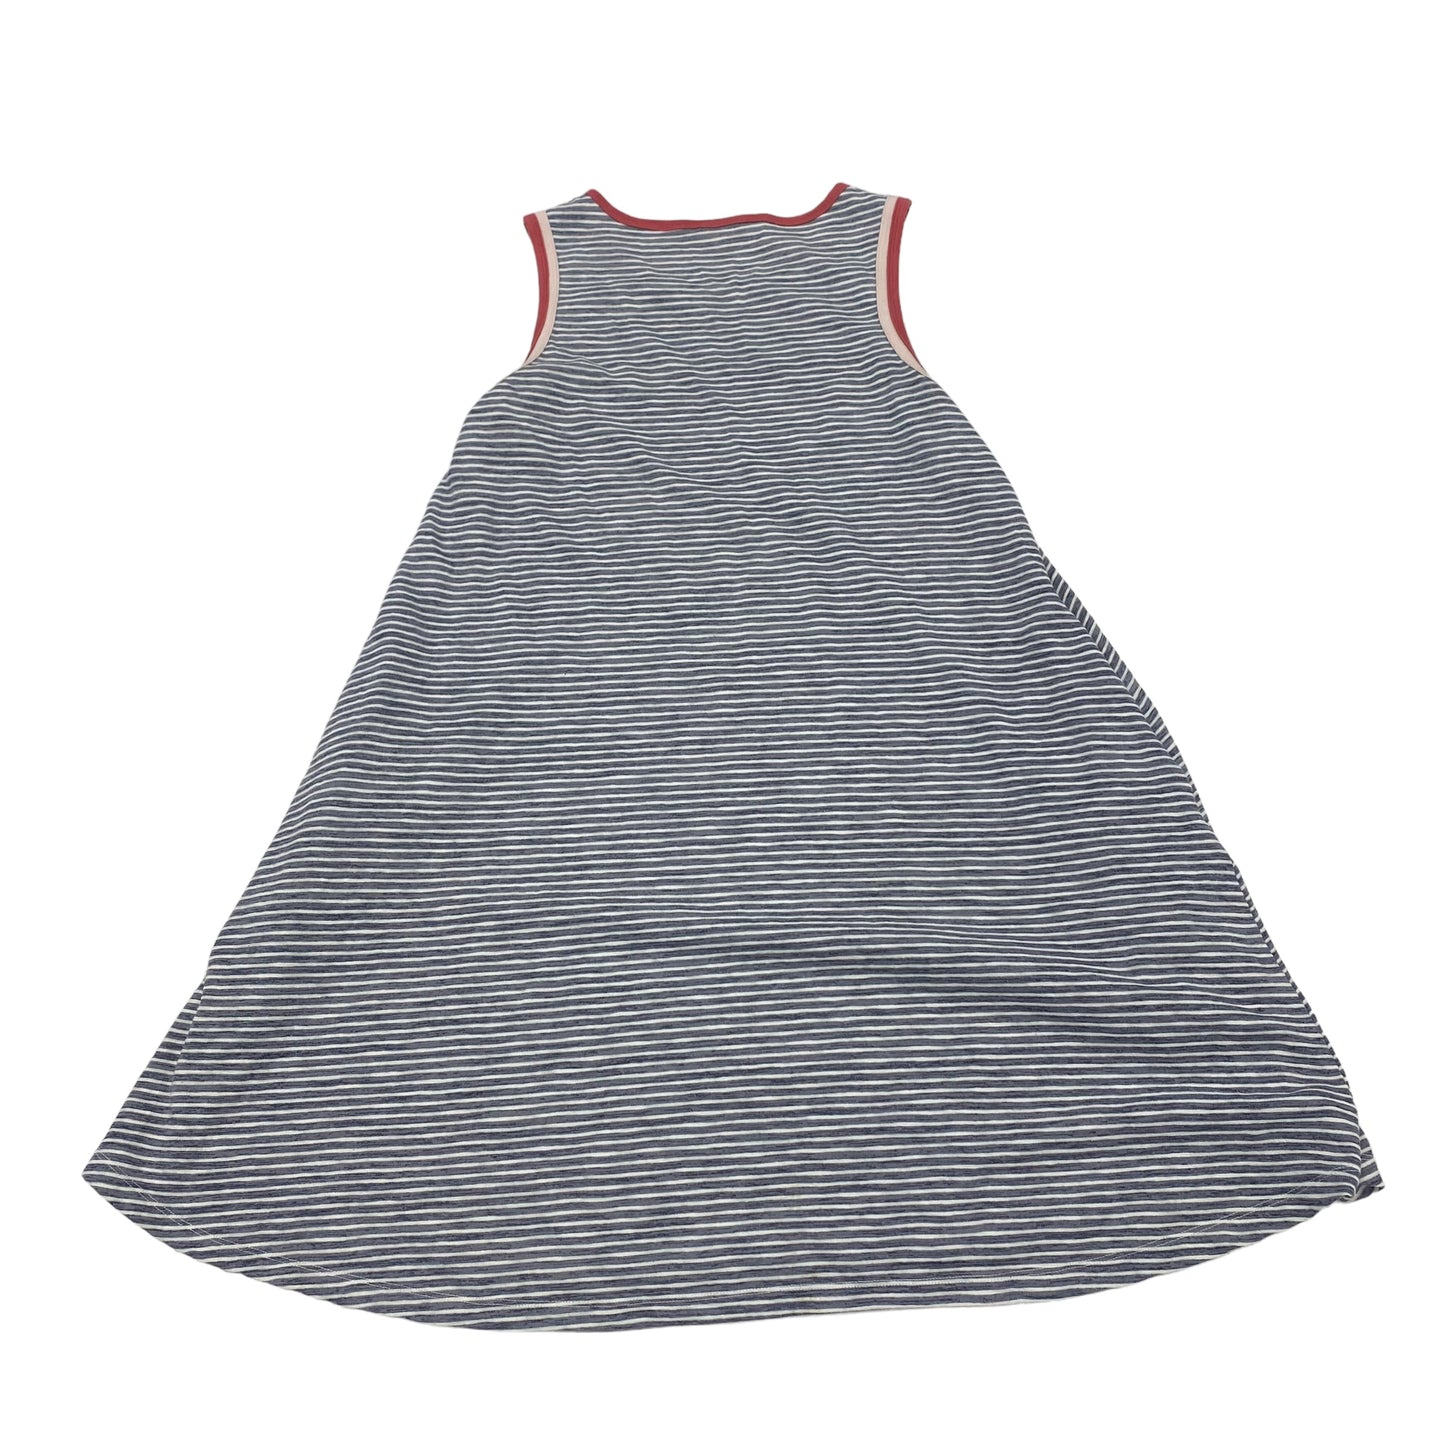 Dress Casual Short By Hem & Thread  Size: S